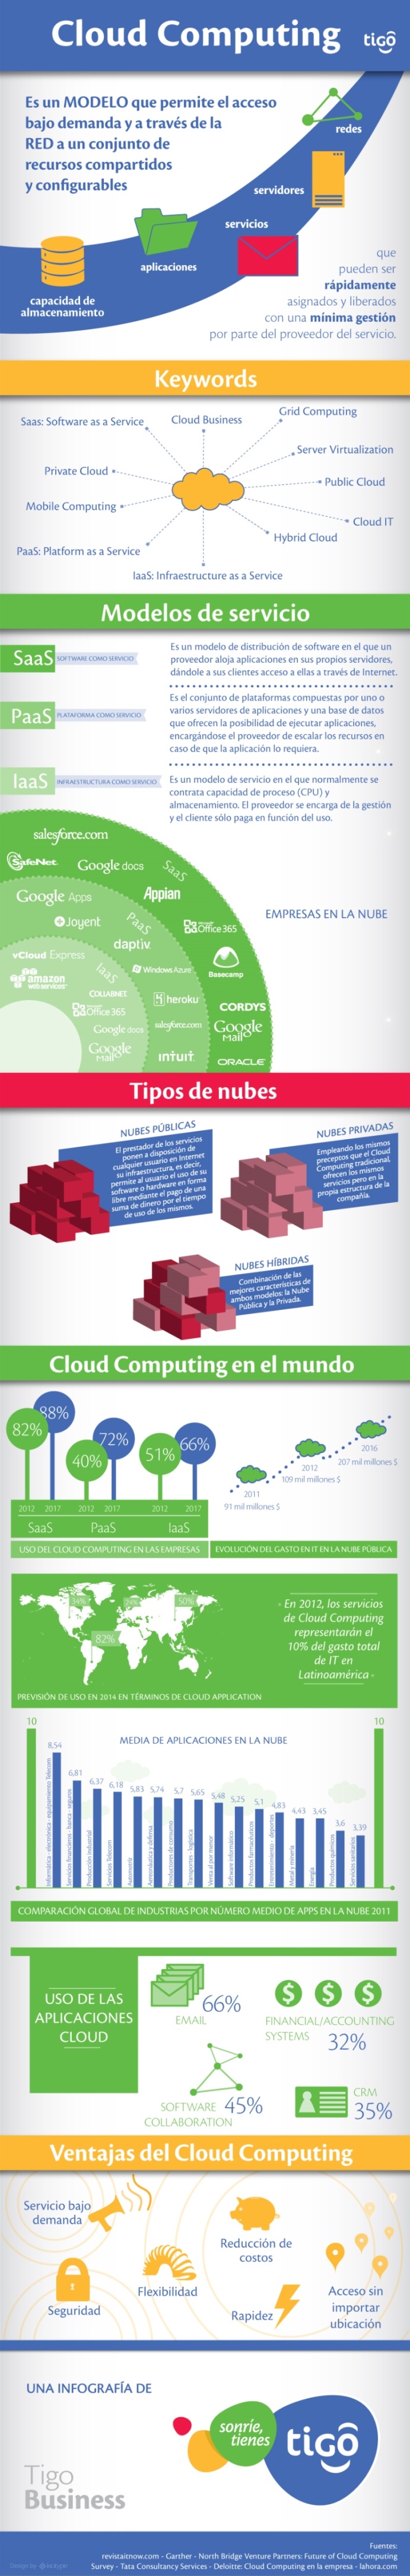 Infografia Cloud Computing